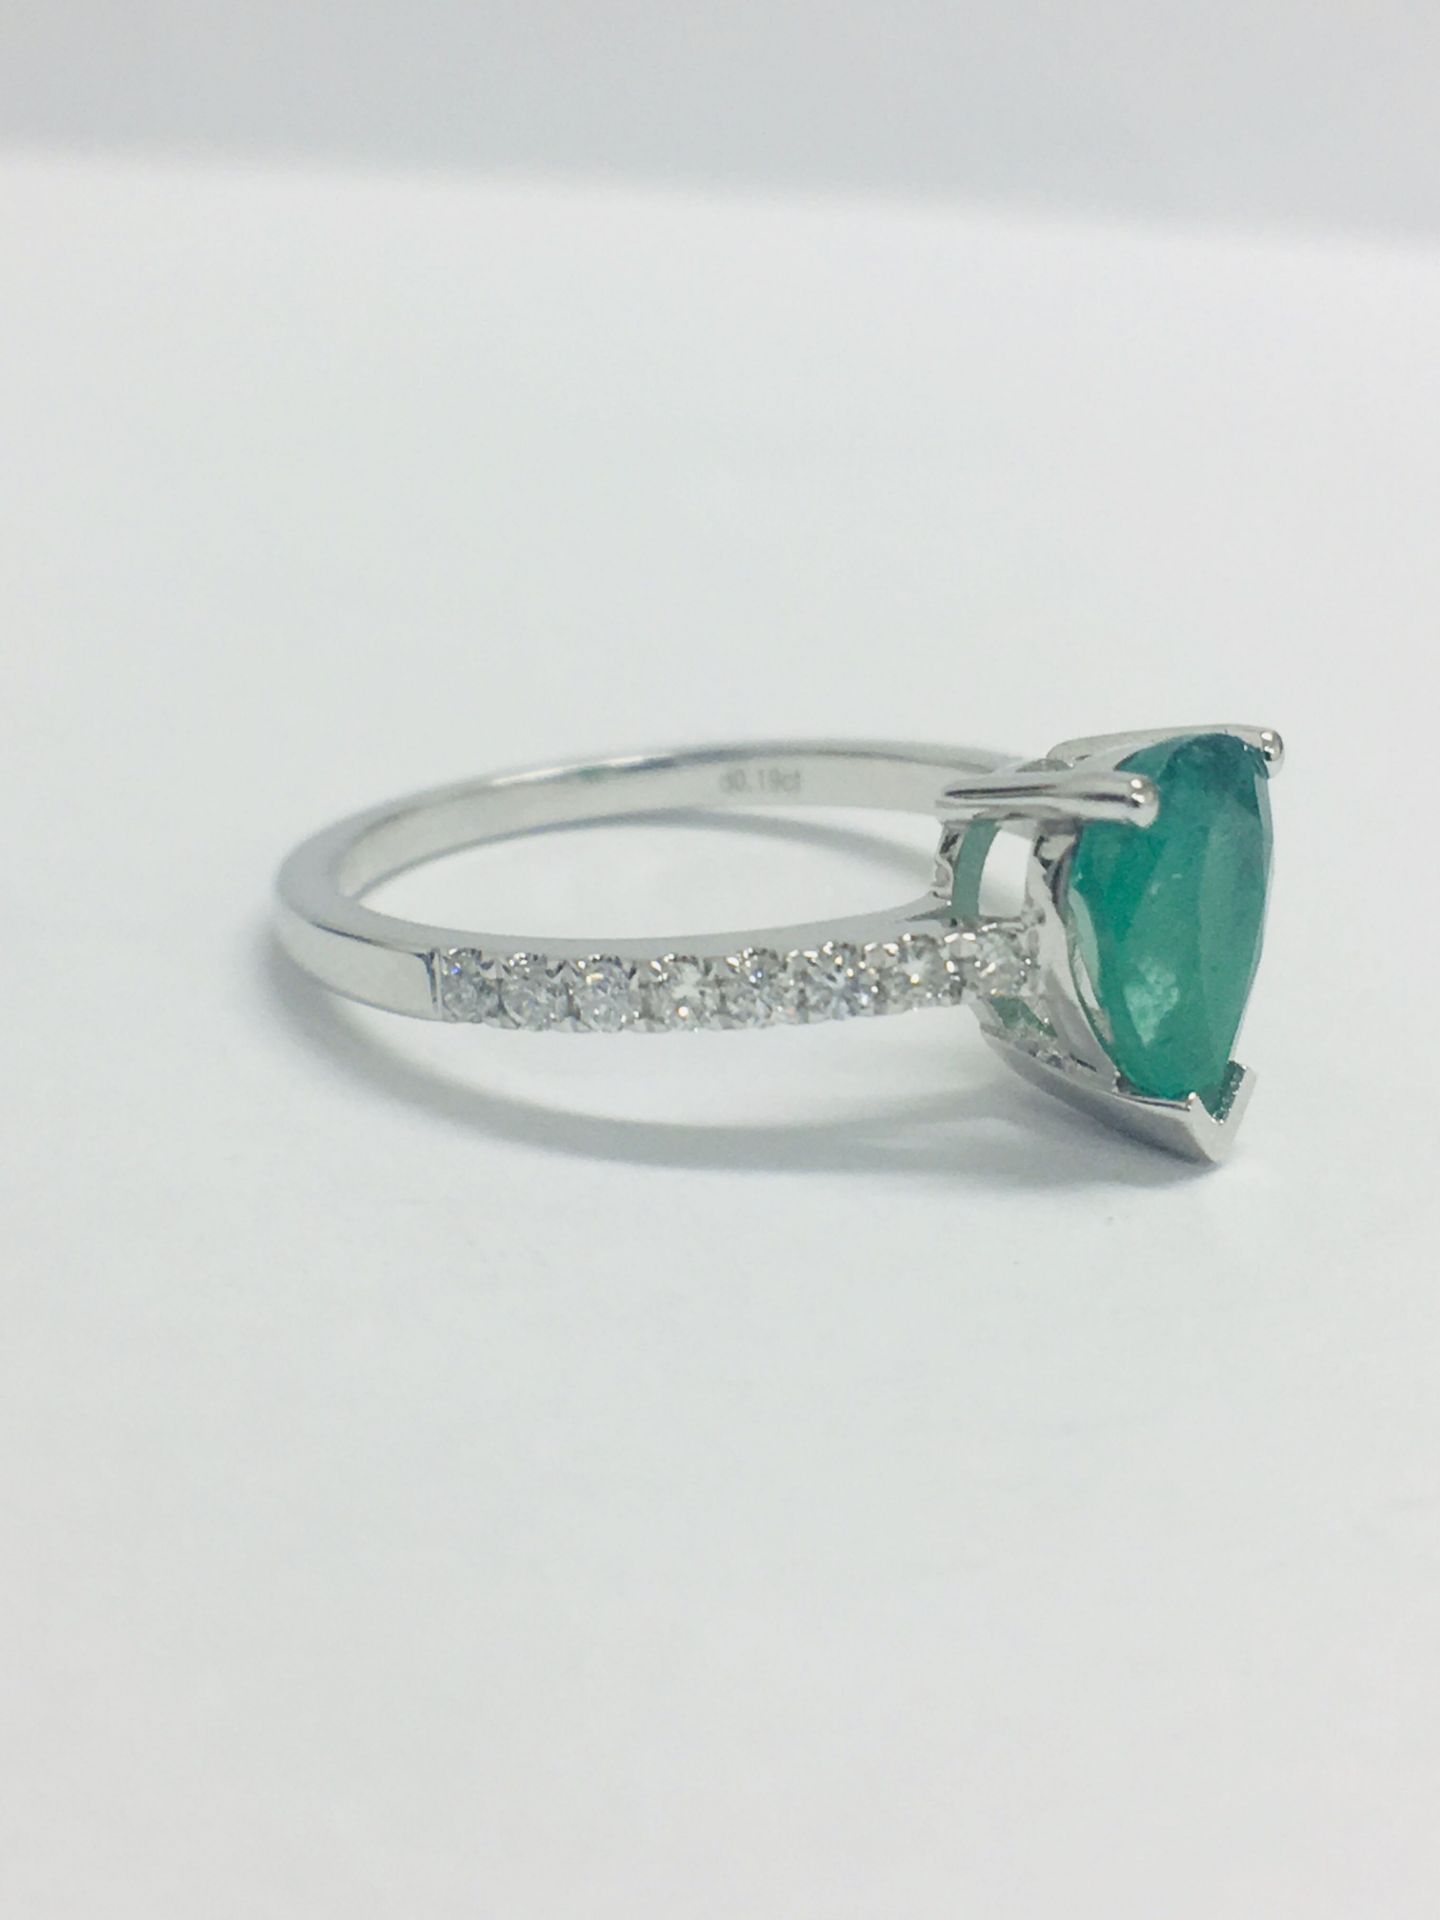 14ct White Gold Emerald & Diamond Ring - Image 3 of 7